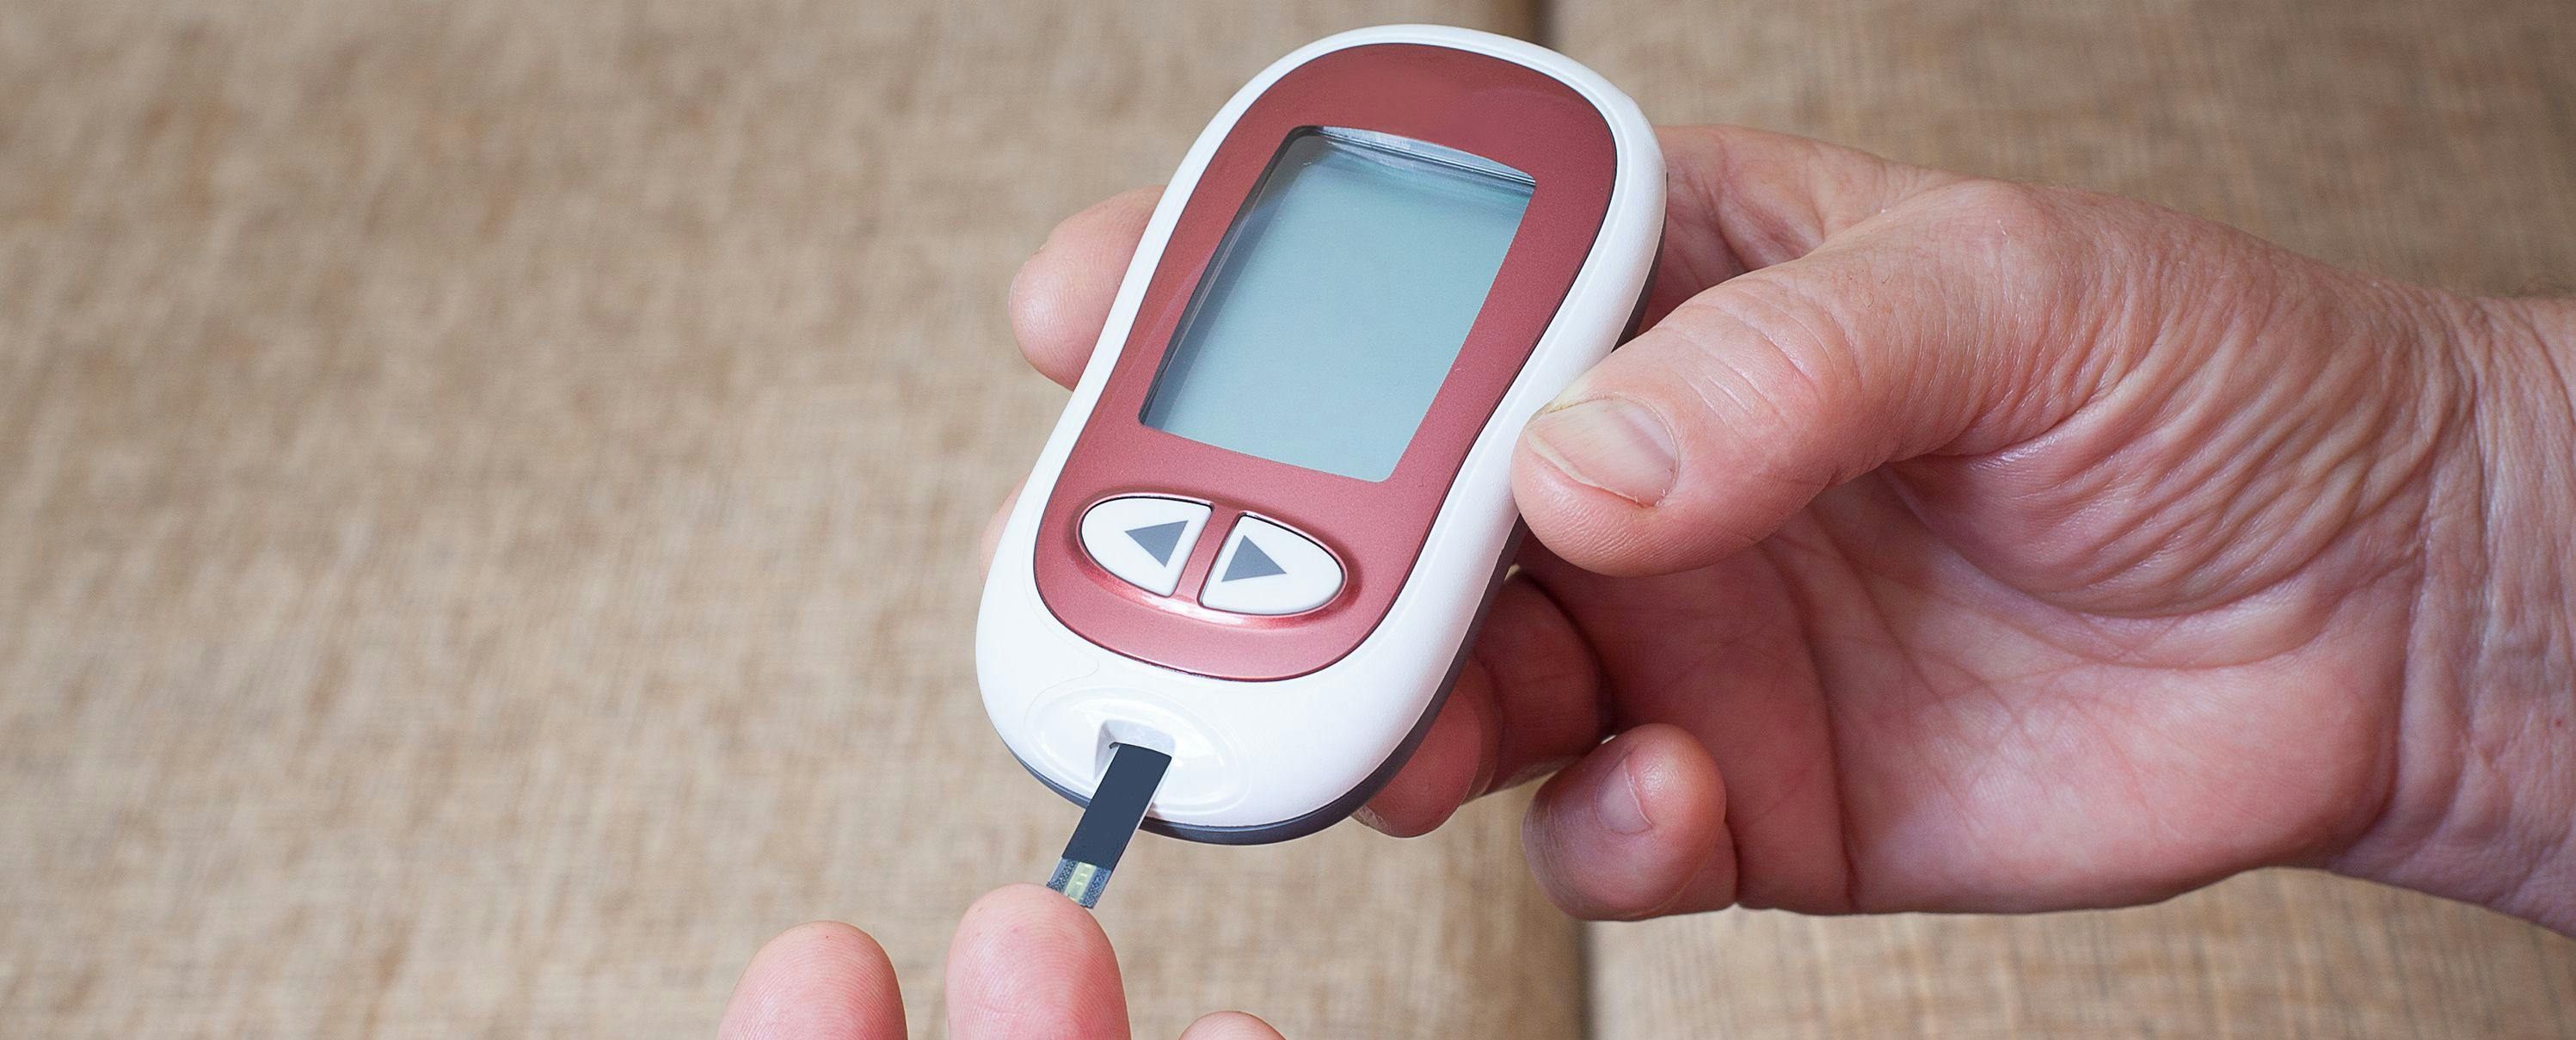 GLP-1 Diabetes Drug Shows Promise in Mid-Stage Trial